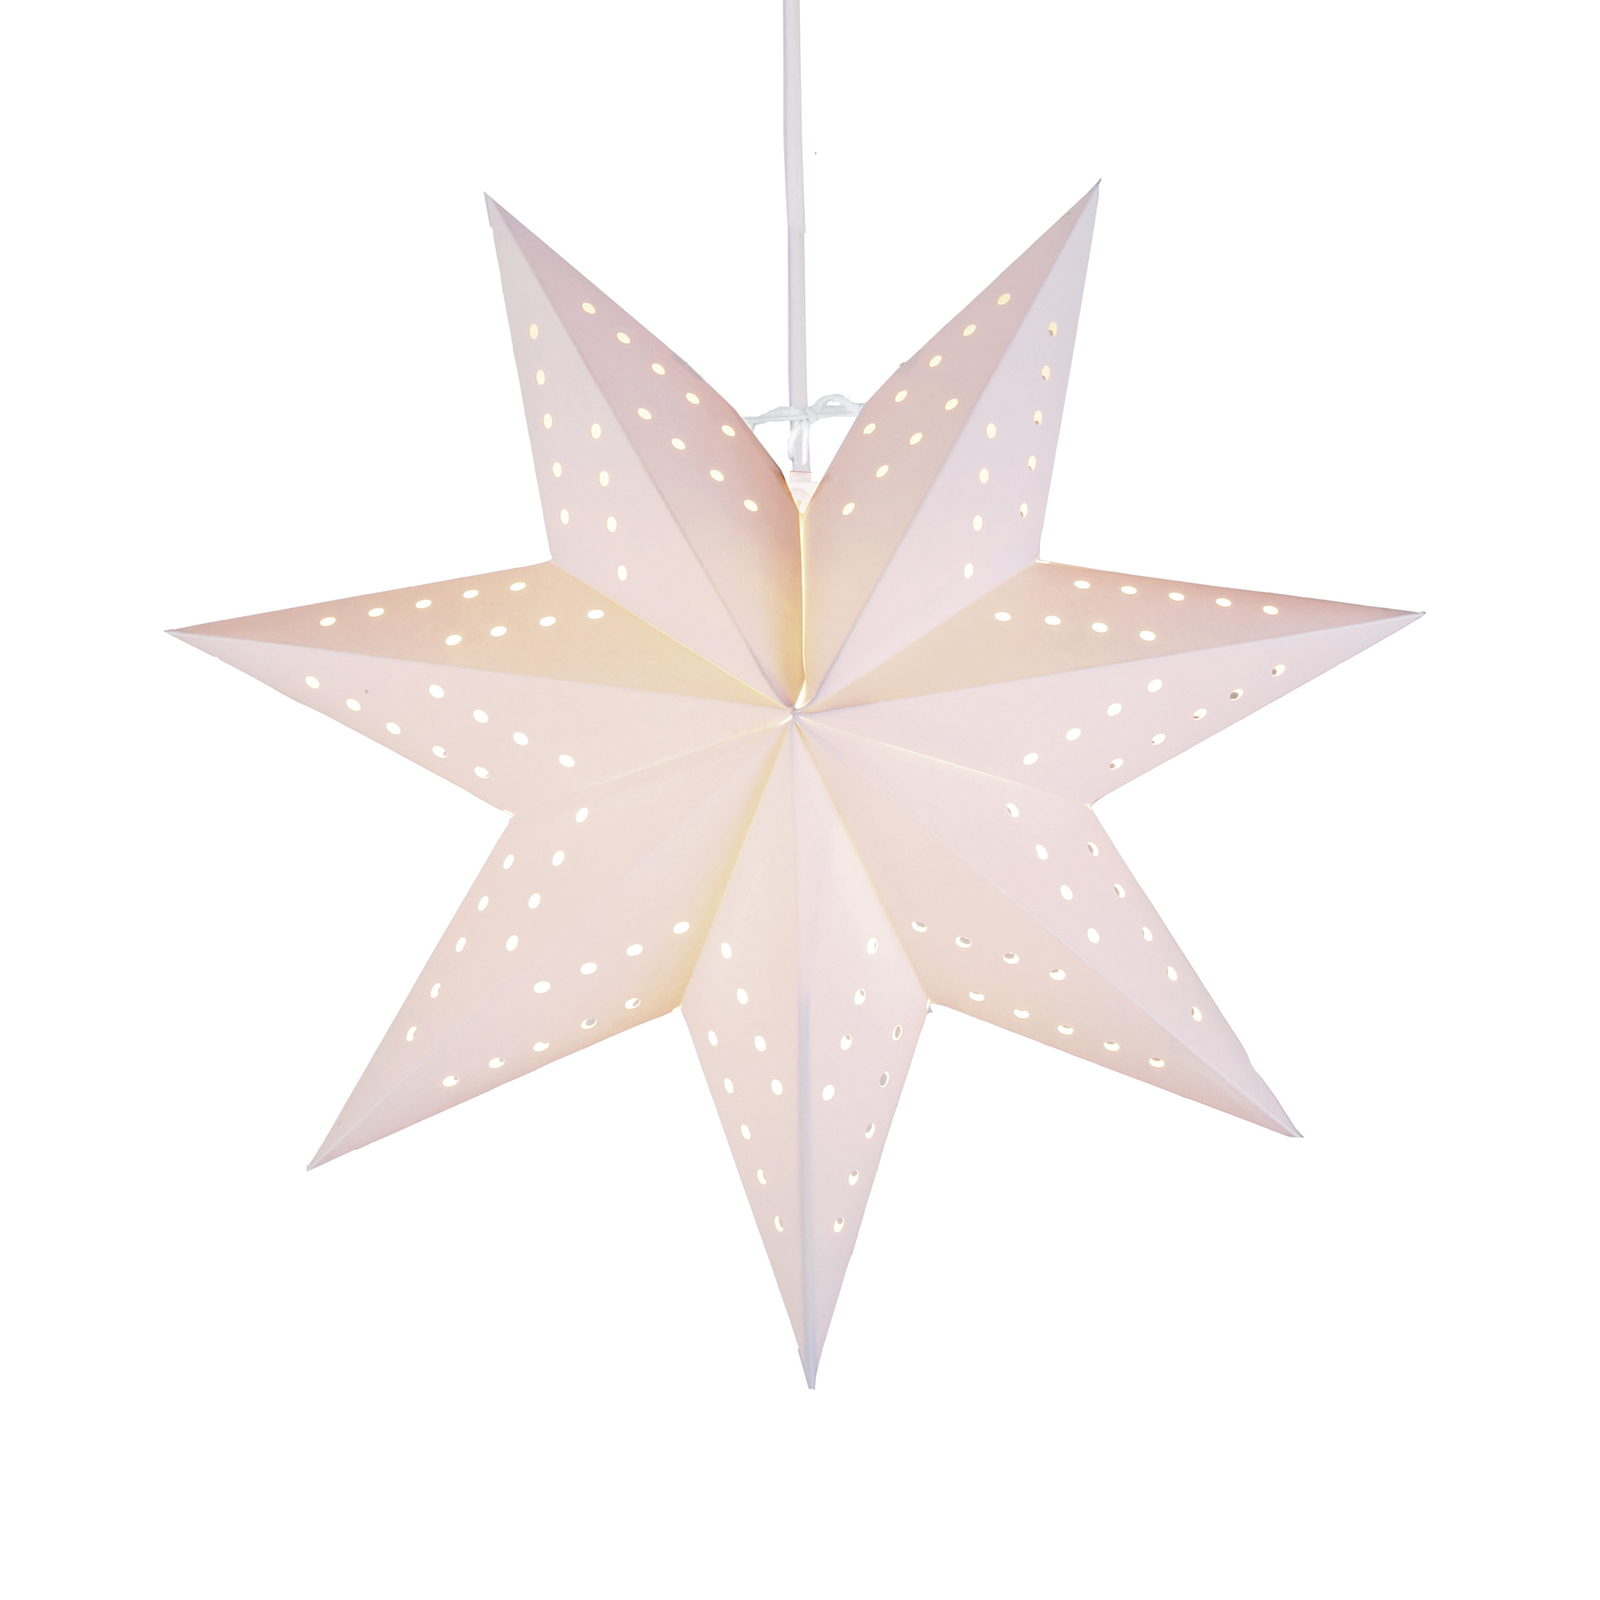 Bobo paper star, 7-pointed, white, Ø 34 cm